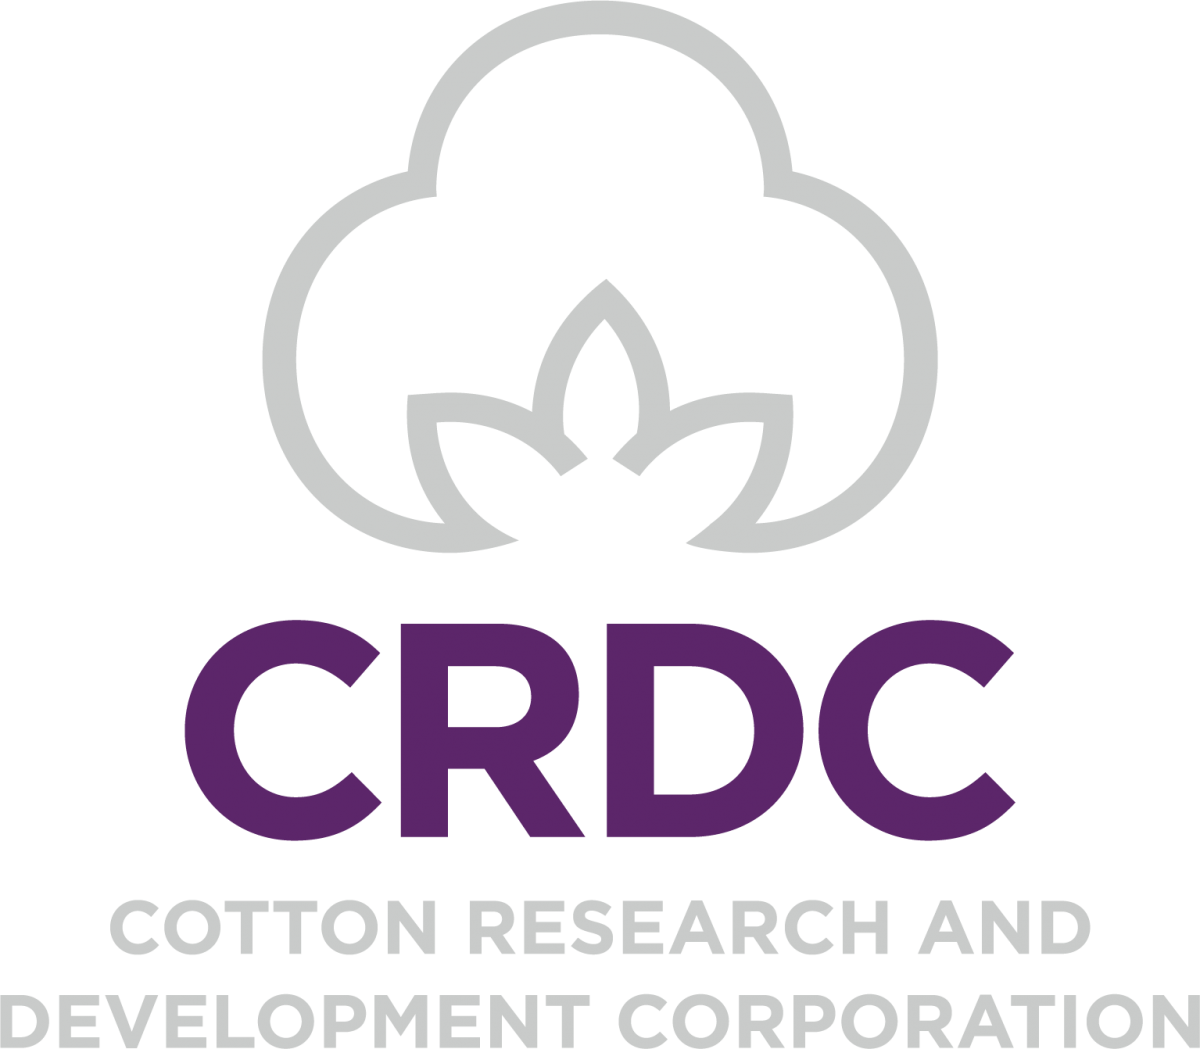 CRDC logo - Cotton Research and Development Corporation.